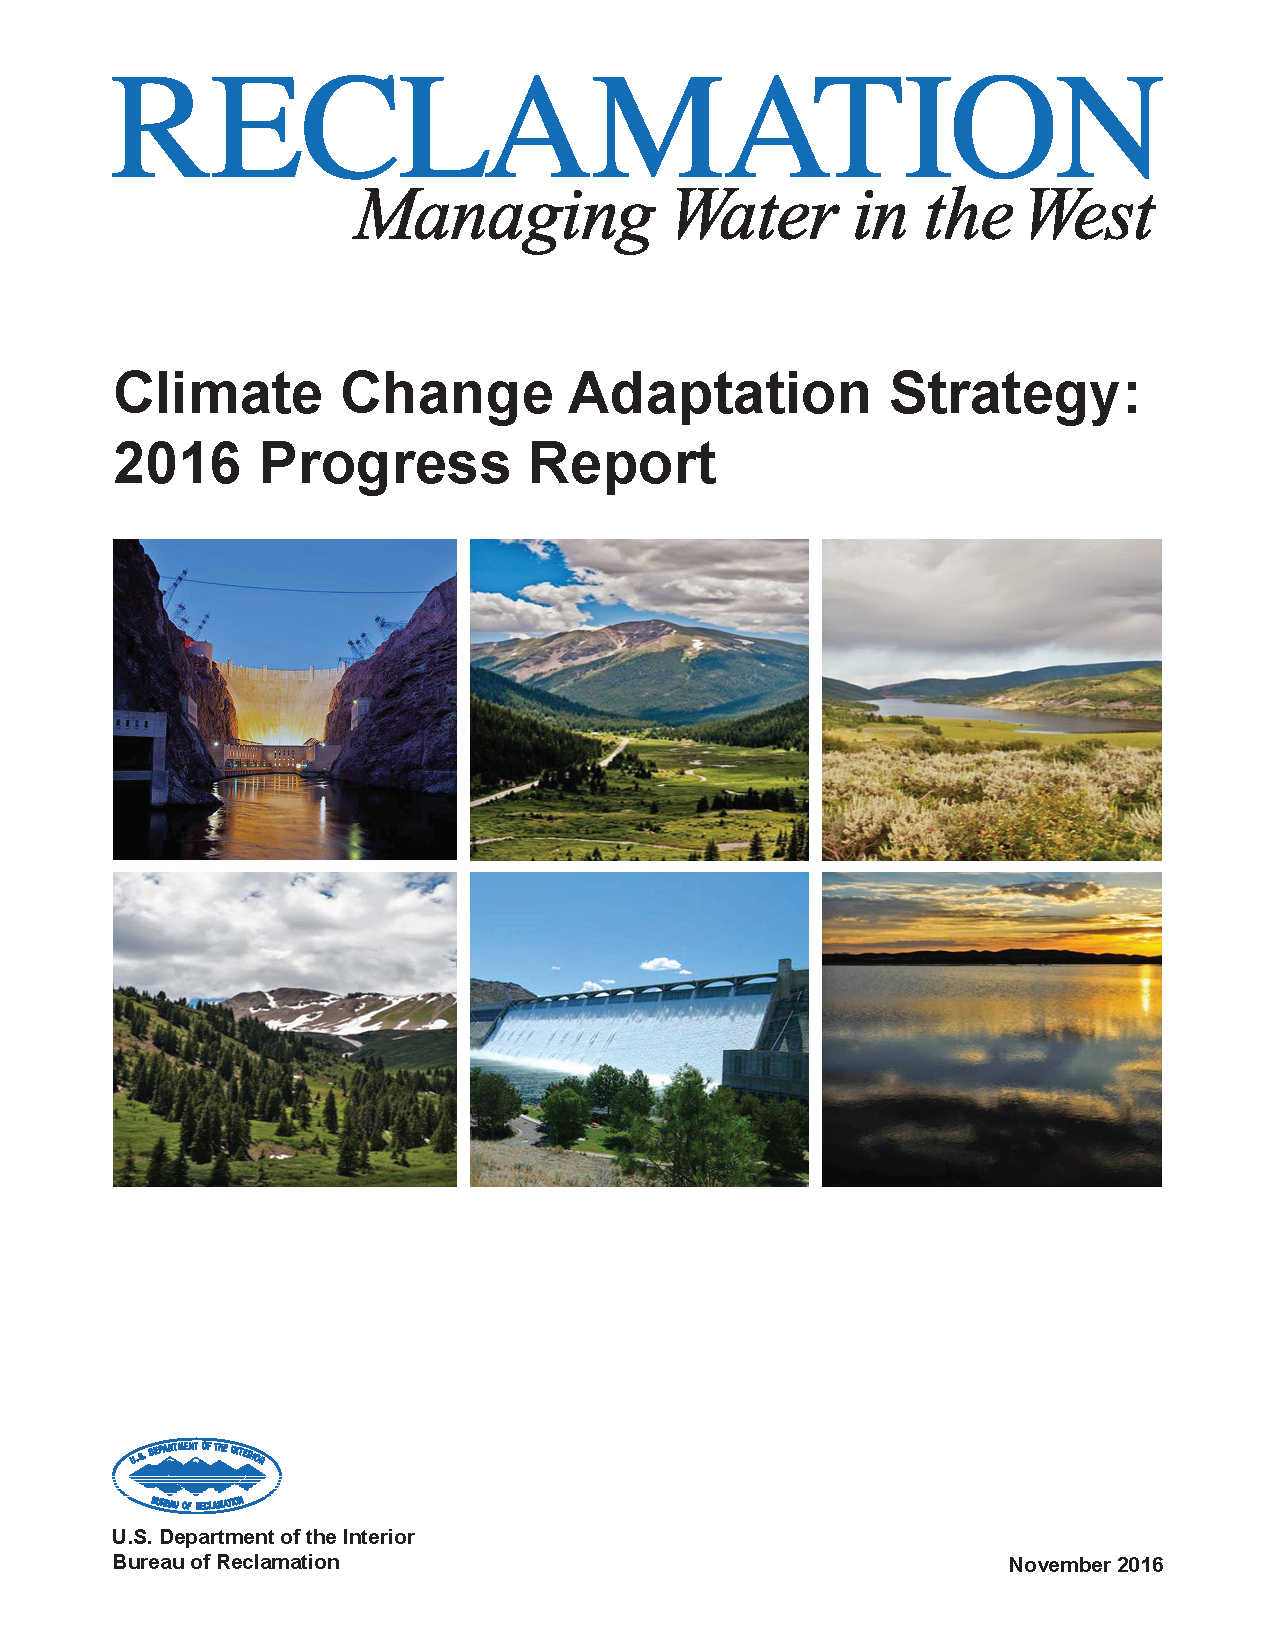 Climate Change Adaptation Strategy Progress Report